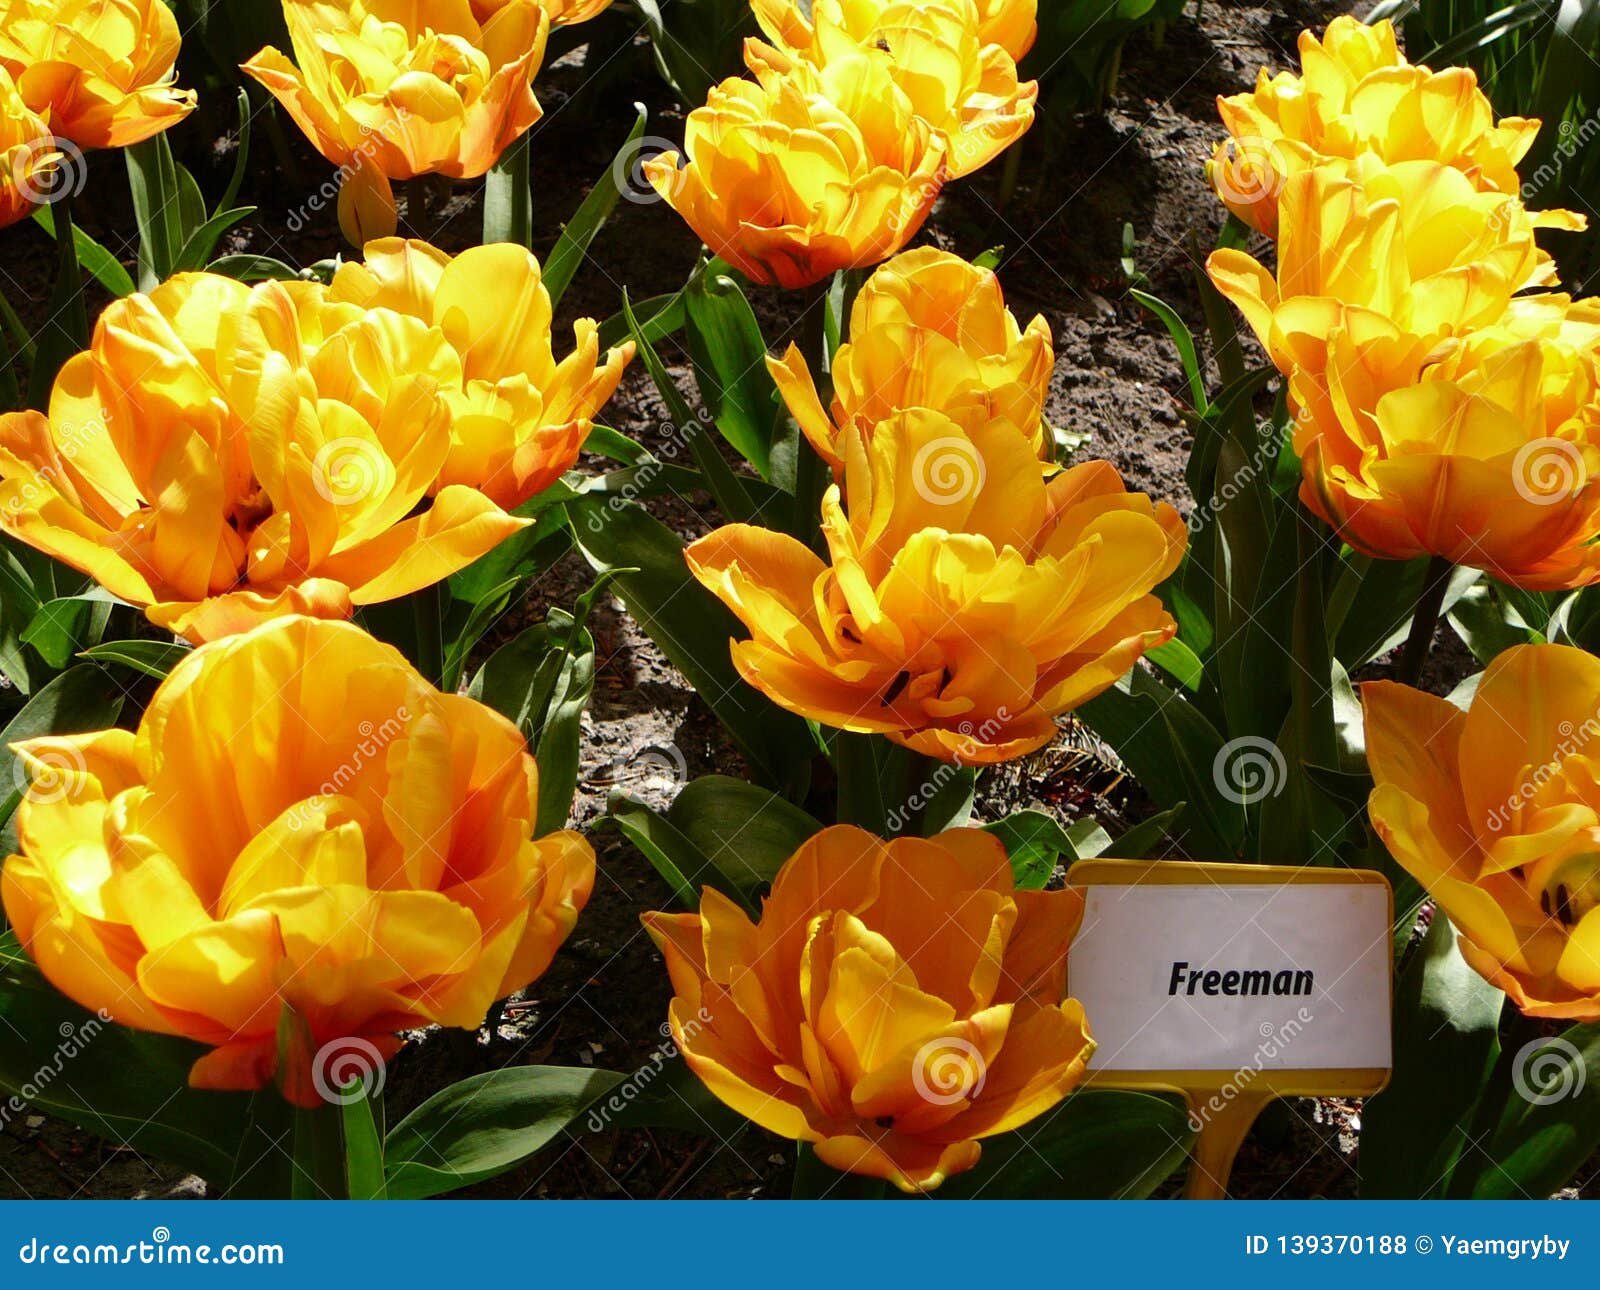 bright yellow orange peony tulips. tulip `freeman`.